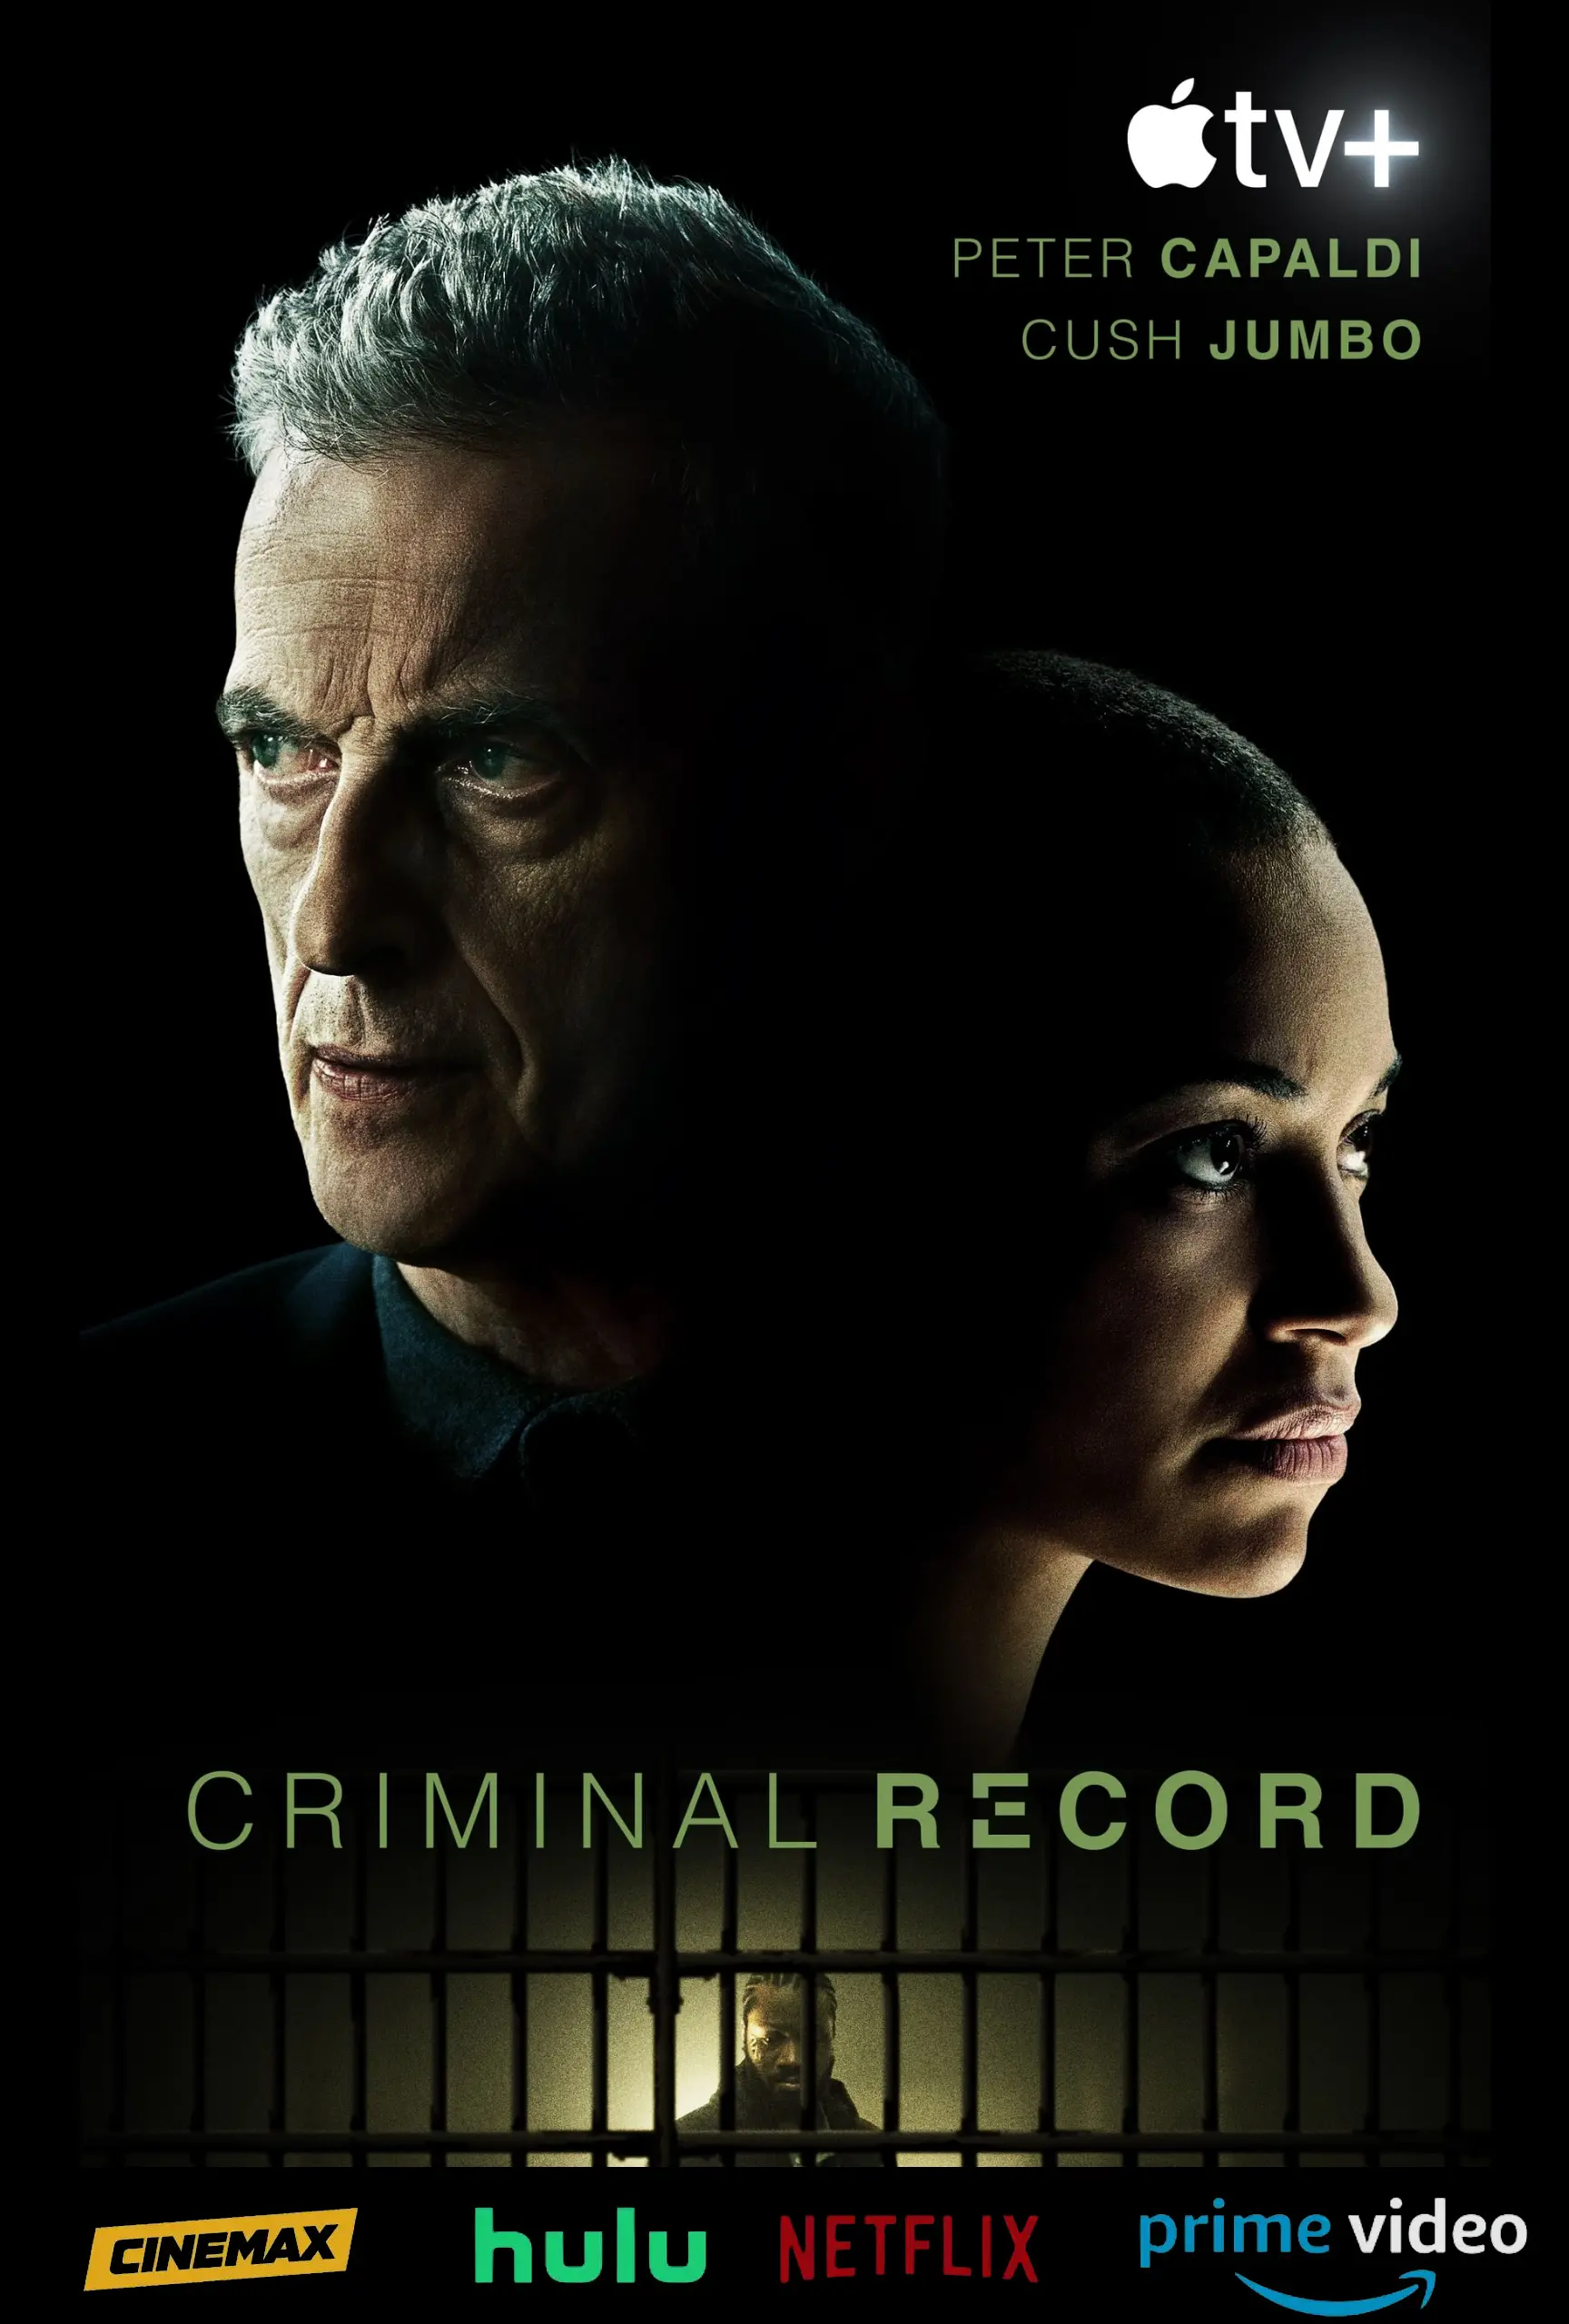 CRIMINAL RECORD movie cinemax,hulu. netflix,prime video